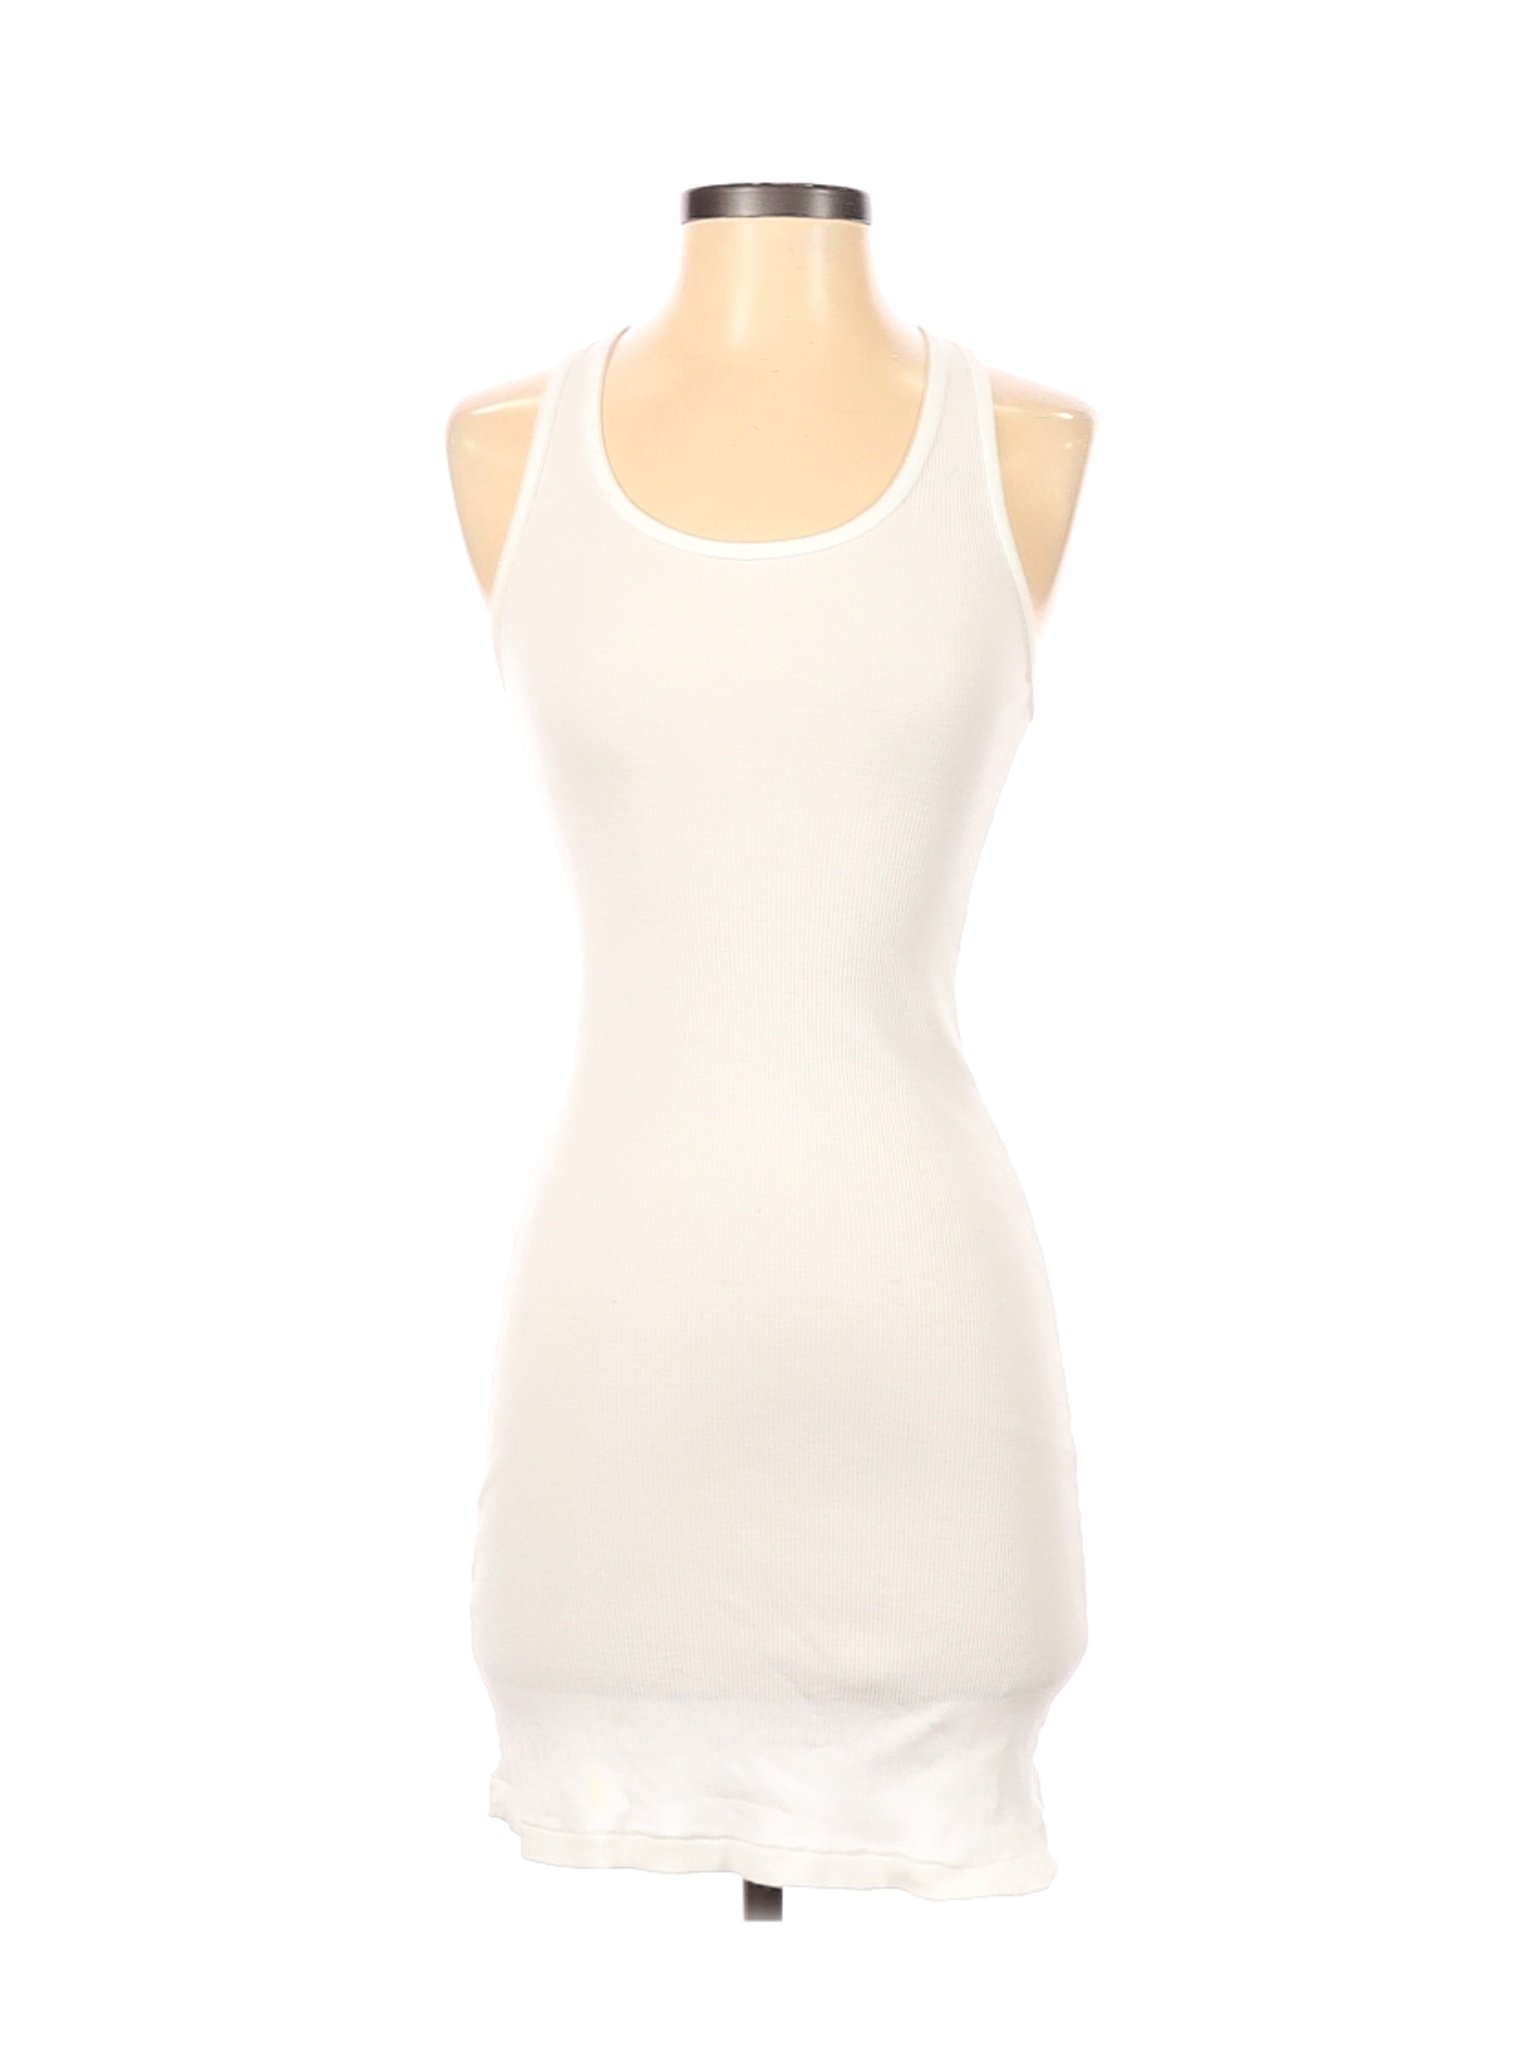 American Apparel Women White Casual Dress S | eBay